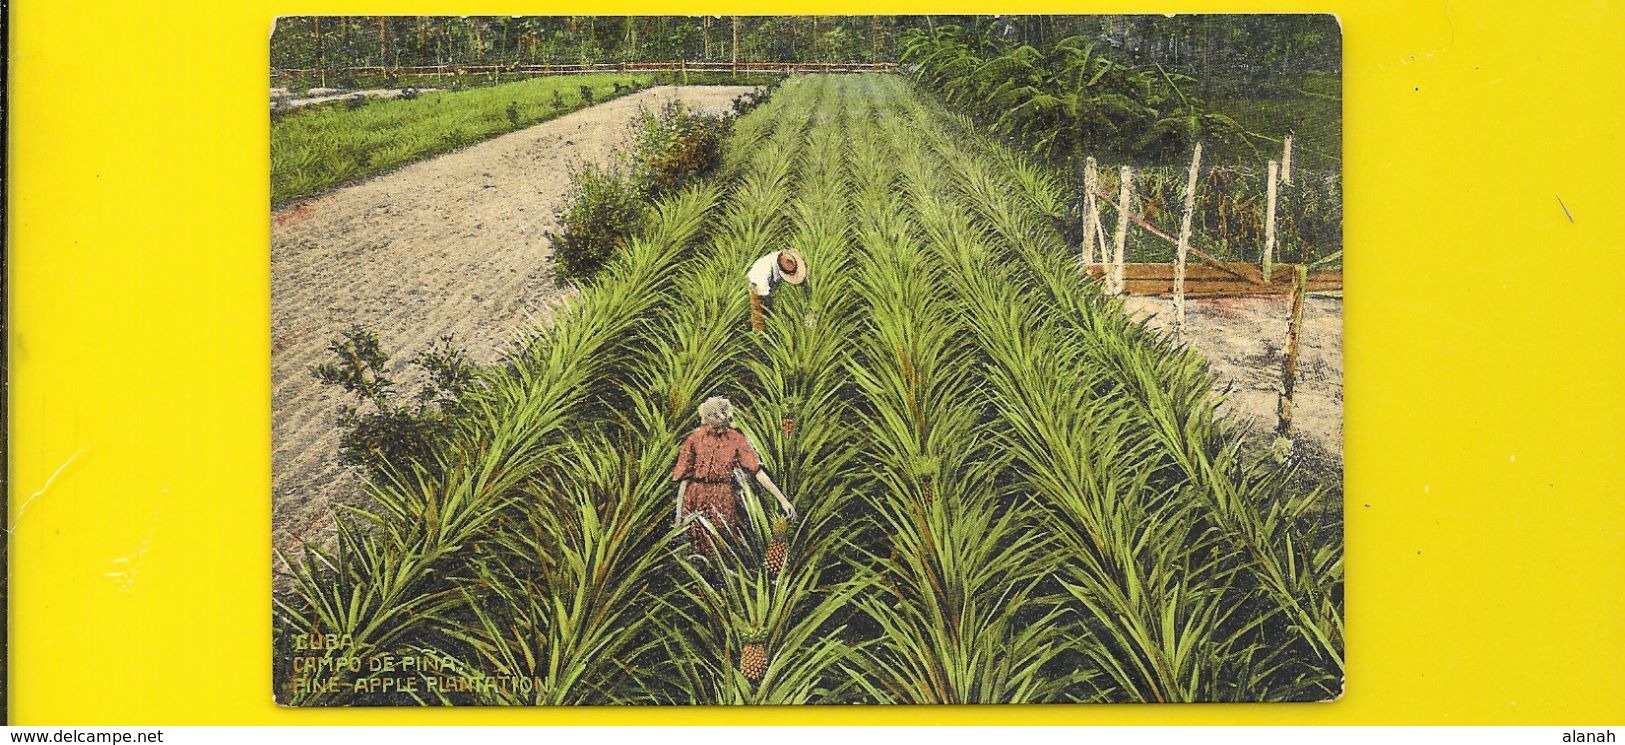 HABANA Campo De Pina Fine Apple Plantation (N° 39) Cuba - Cuba